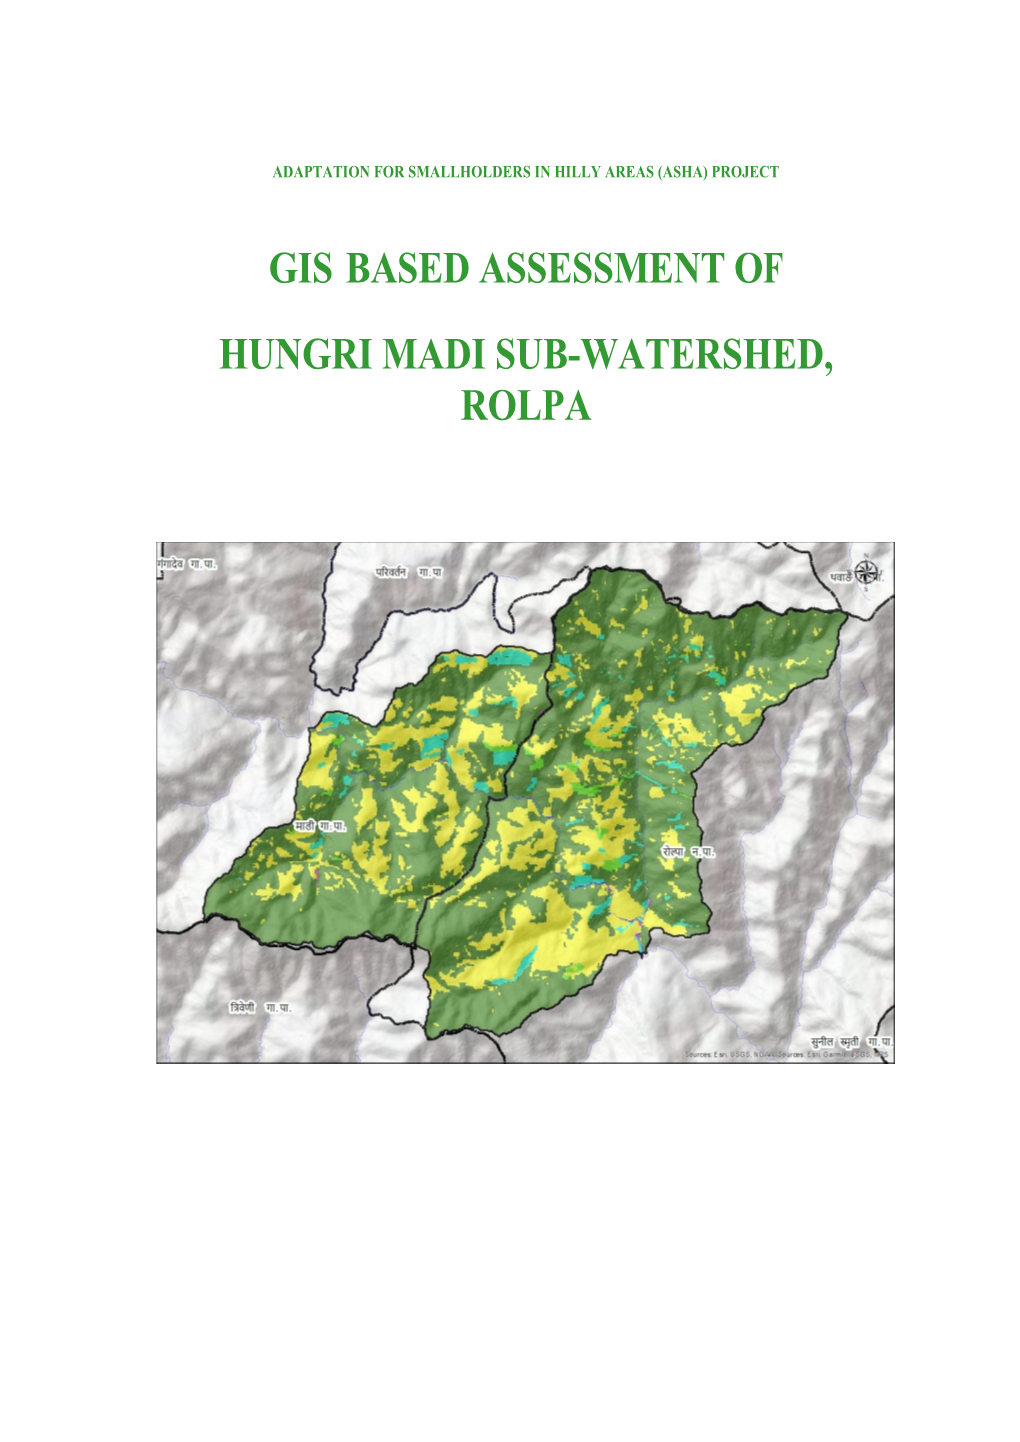 Gis Based Assessment of Hungri Madi Sub-Watershed, Rolpa